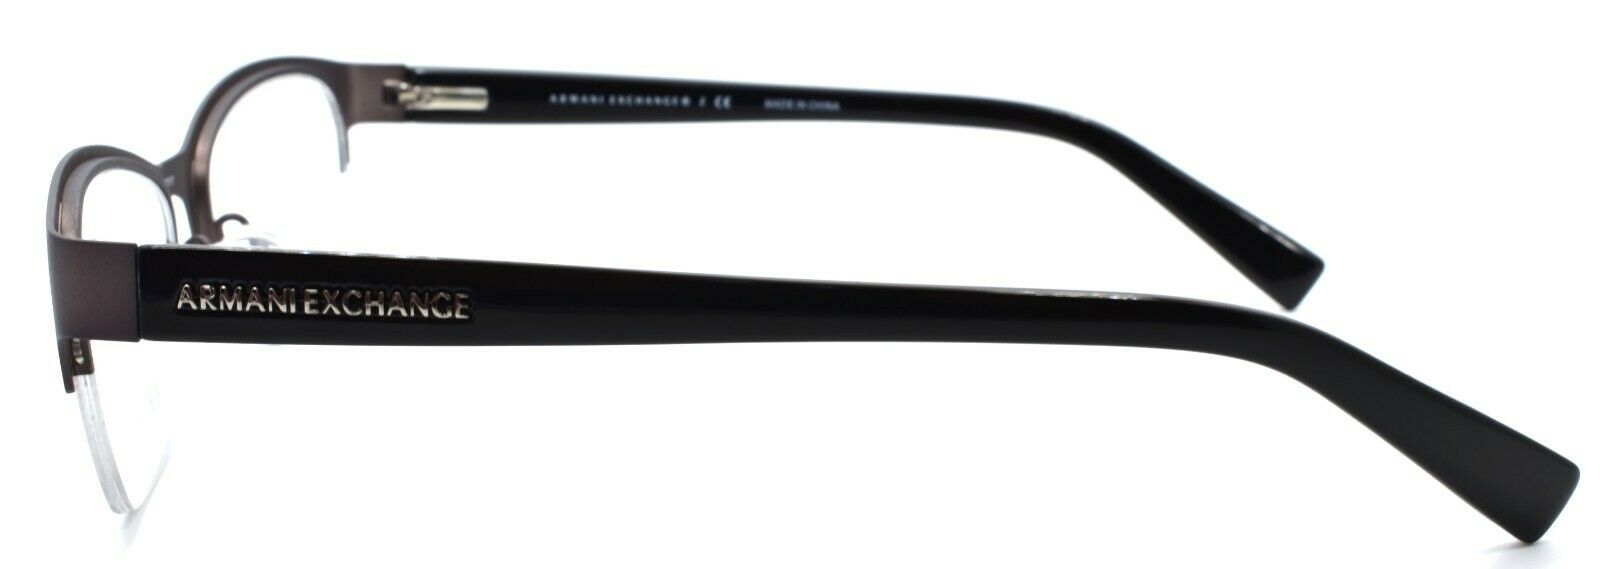 3-Armani Exchange AX1016 6074 Women's Glasses Frames Half-rim 53-17-140 Gunmetal-8053672412338-IKSpecs